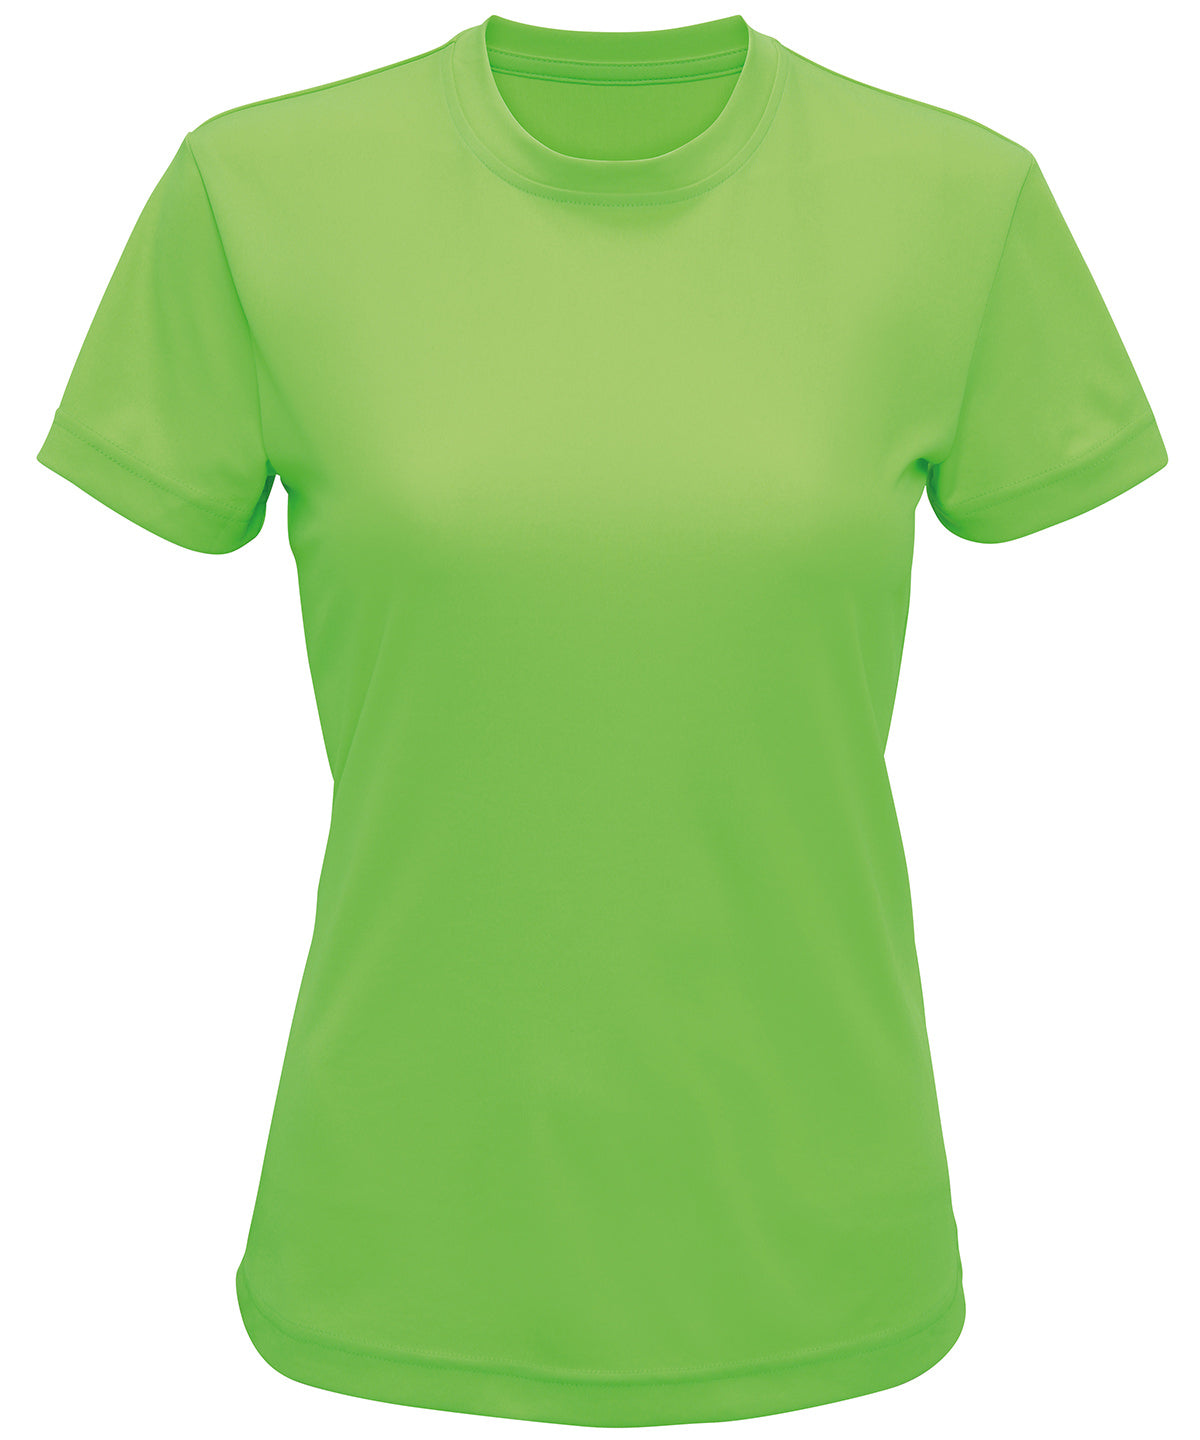 Stuttermabolir - Women's TriDri® Recycled Performance T-shirt